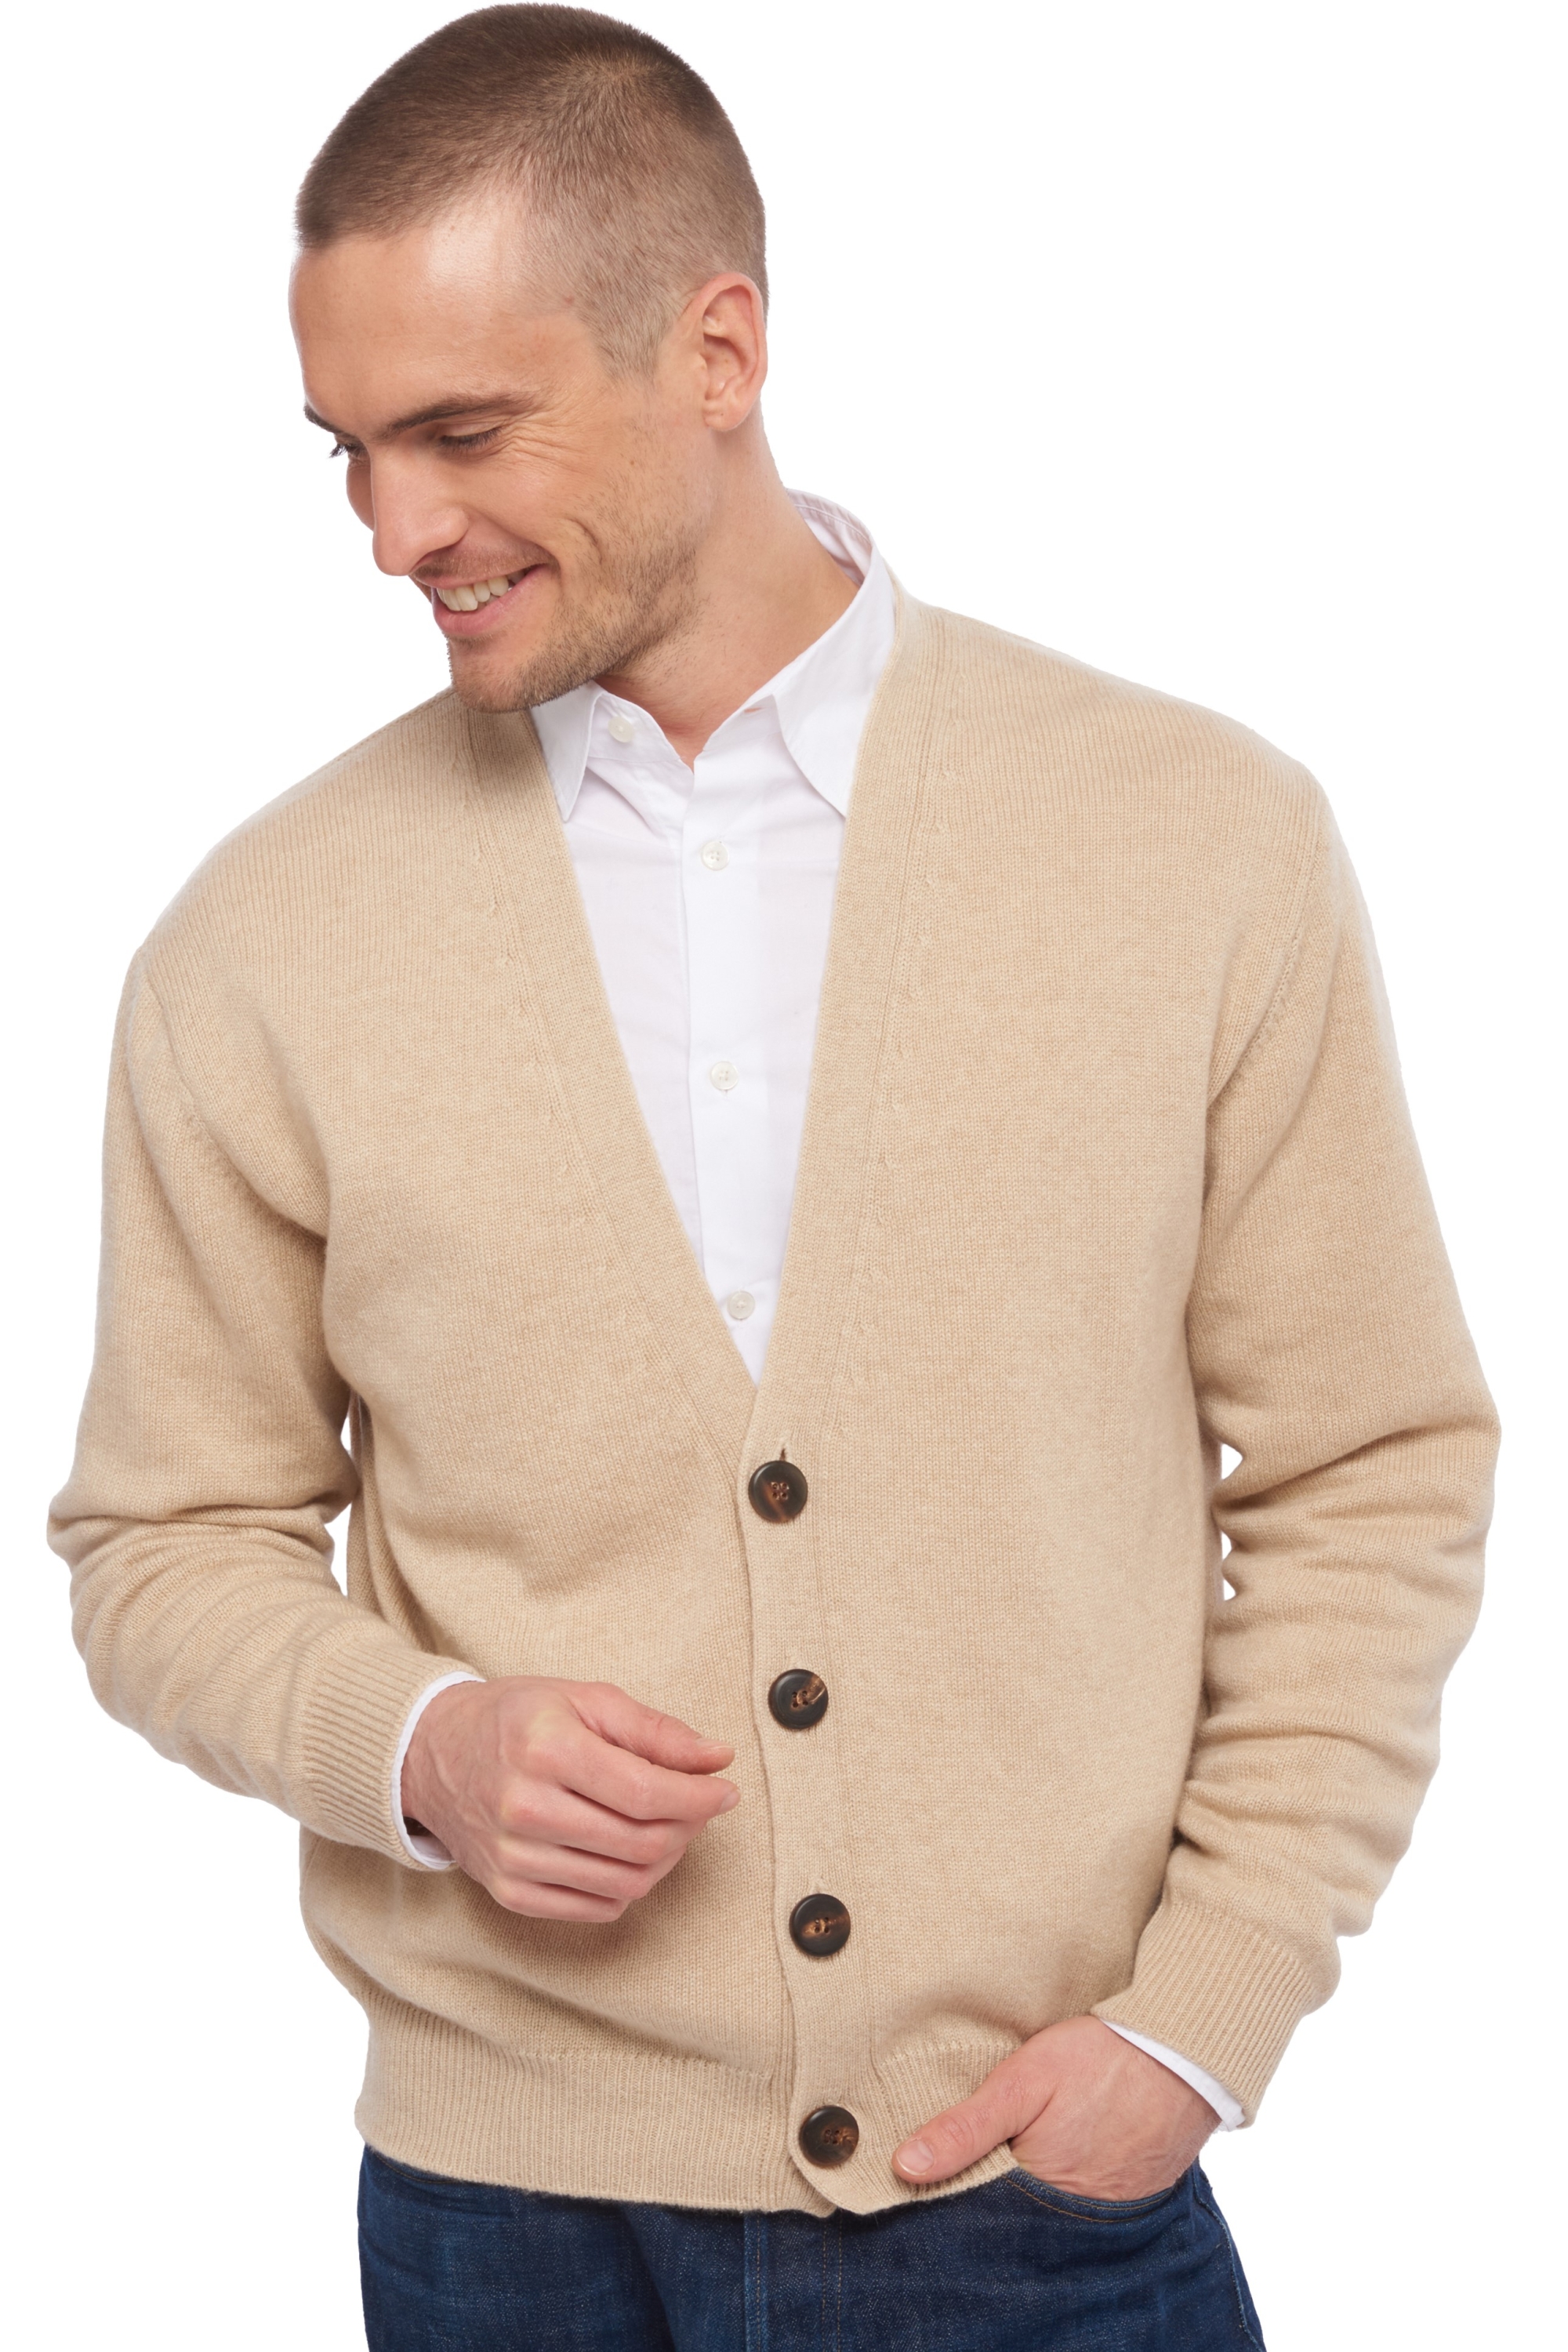 Yak men waistcoat sleeveless sweaters podrick vintage beige chine l